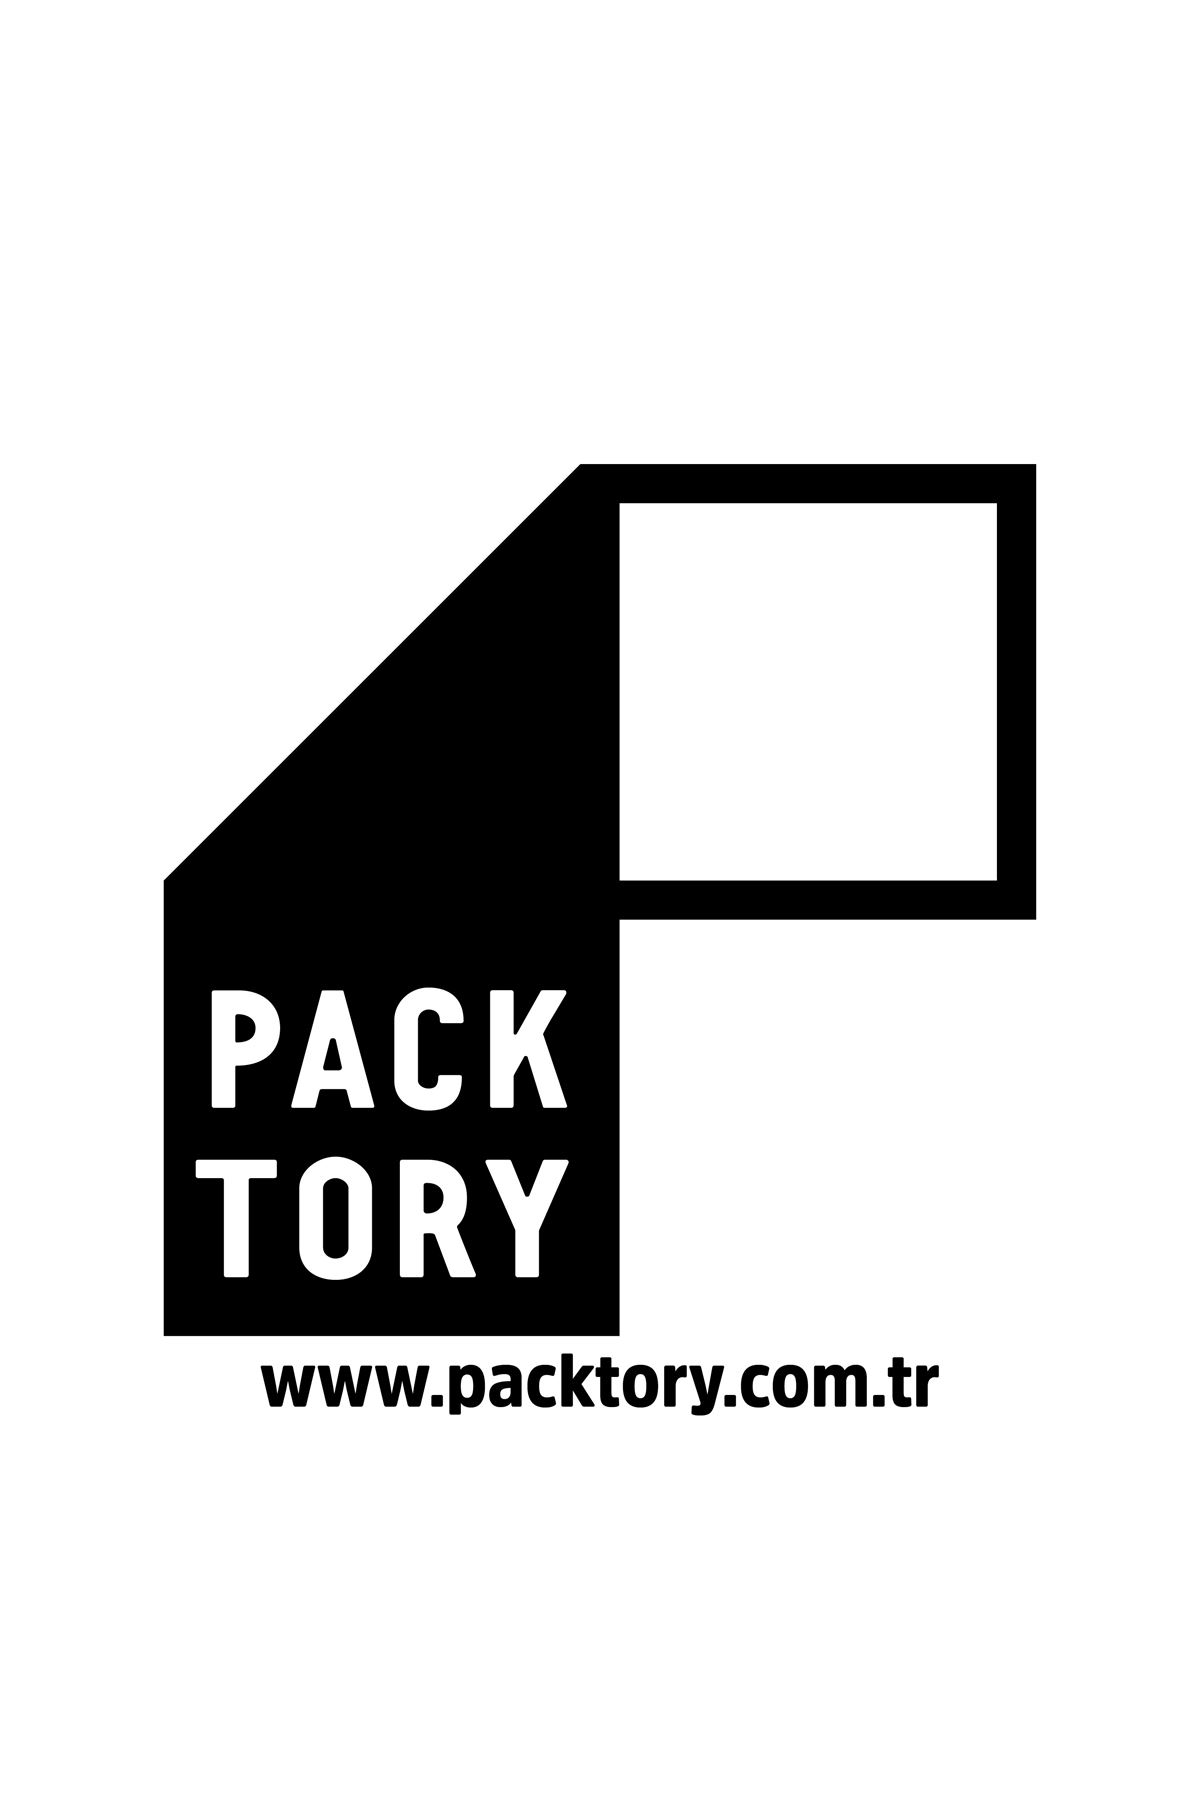 Packtory 11 x 18,5 + 3,5 Cm Aluminyum Kilitli Doypack Ambalaj 100 Gr. 50 Adet 